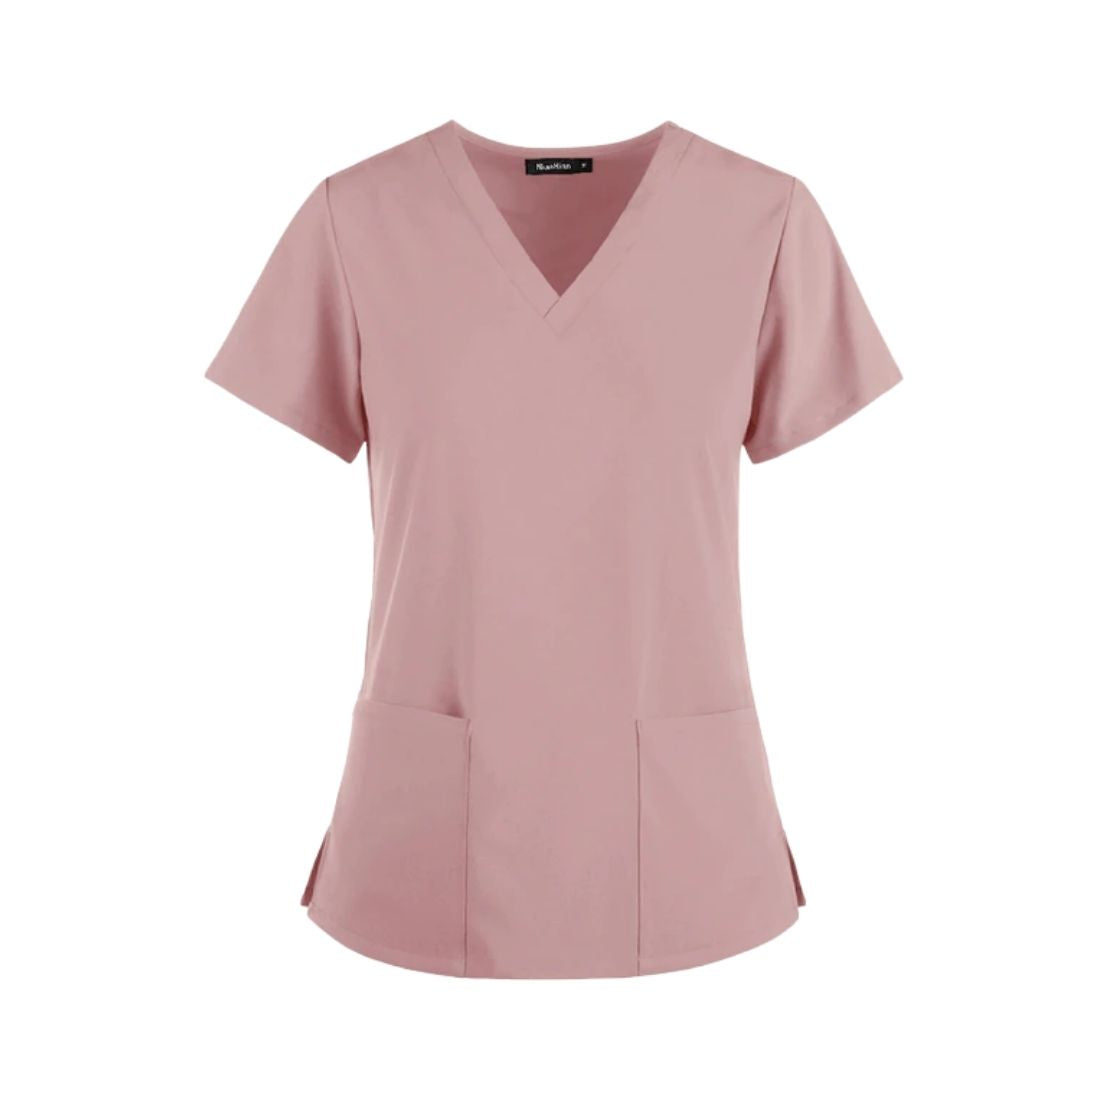 Unisex Doctor Scrubs - Hospital Nurse/Student Uniform